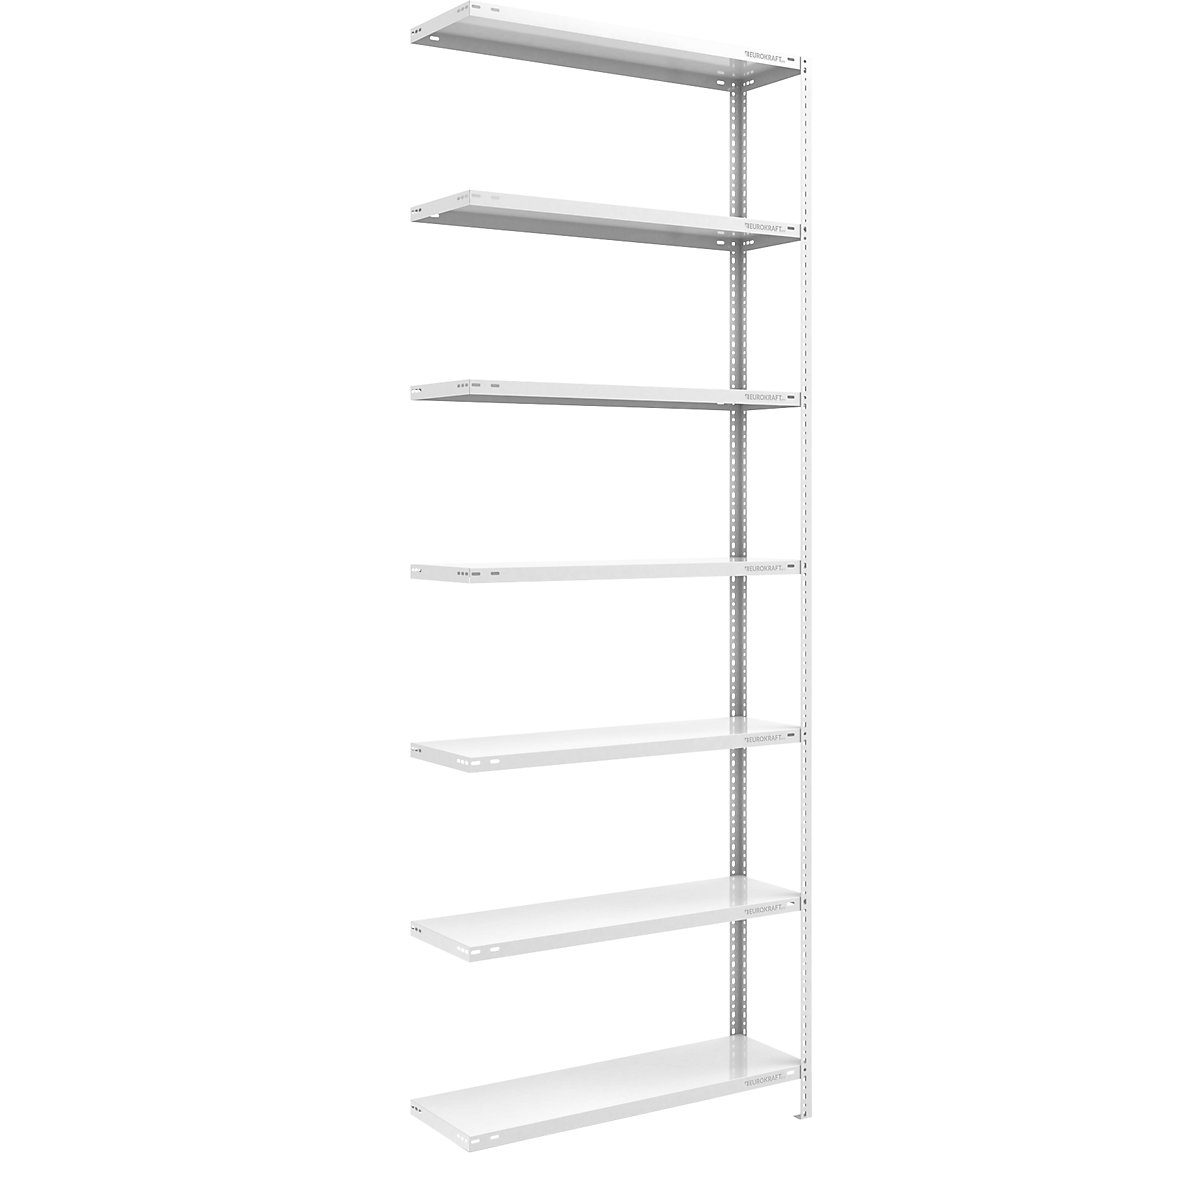 Bolt-together shelf unit, light duty, plastic coated – eurokraft pro, shelf unit height 3000 mm, shelf width 1000 mm, depth 400 mm, extension shelf unit-10